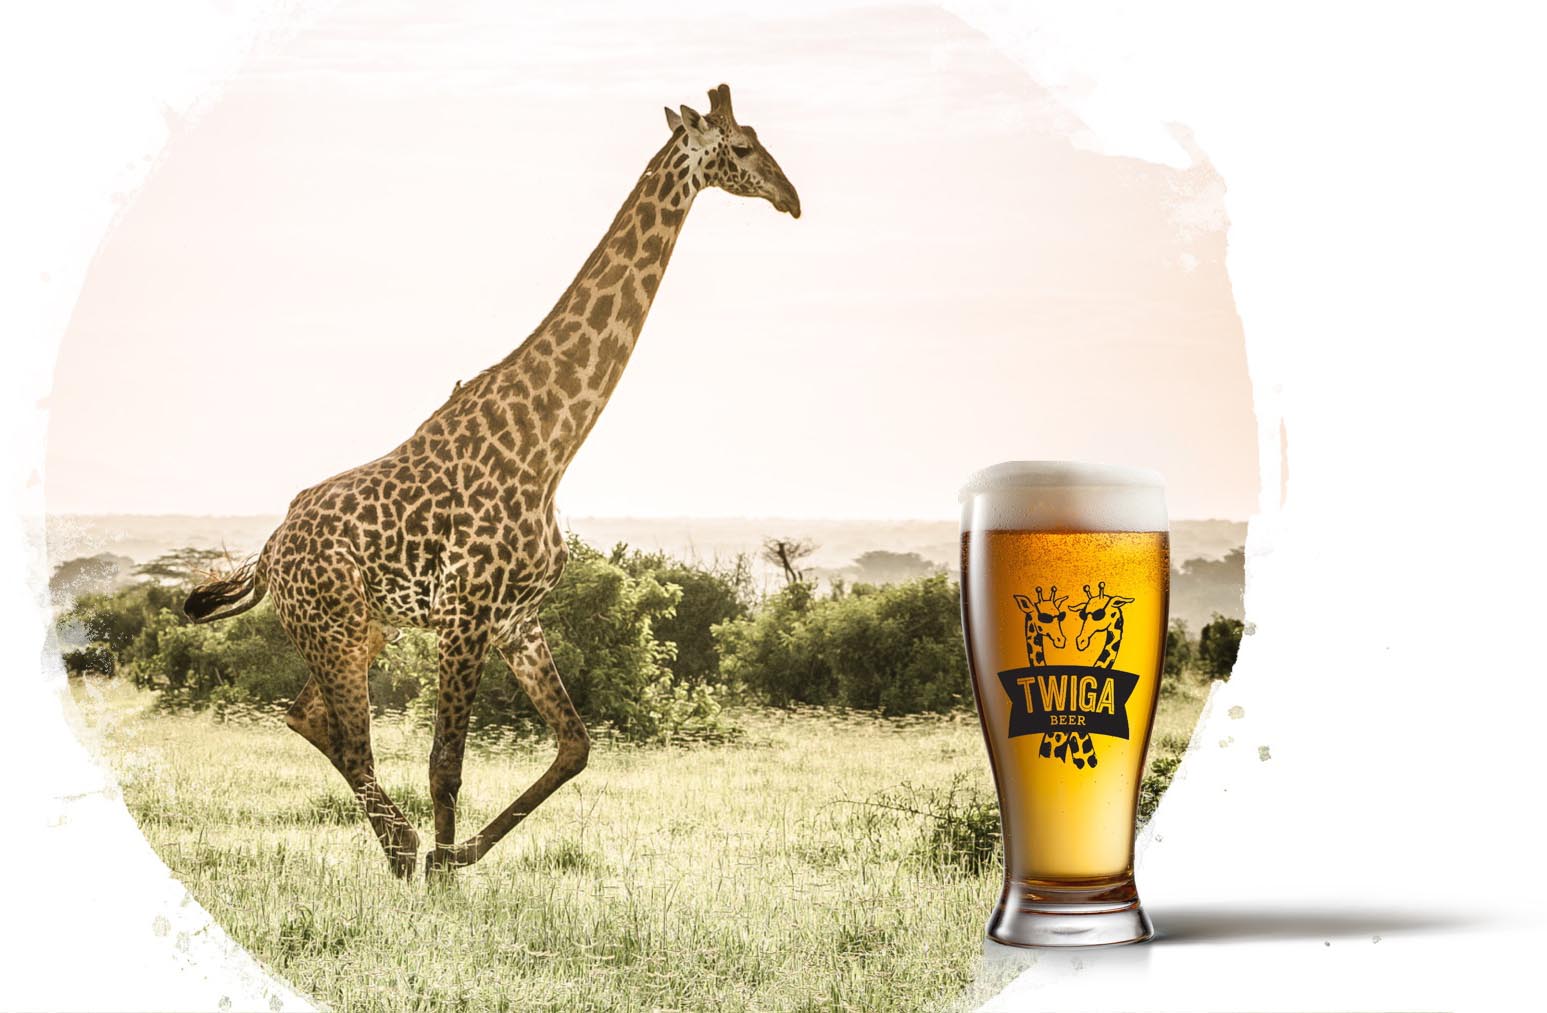 What is a Beer Giraffe? – The Beer Giraffe